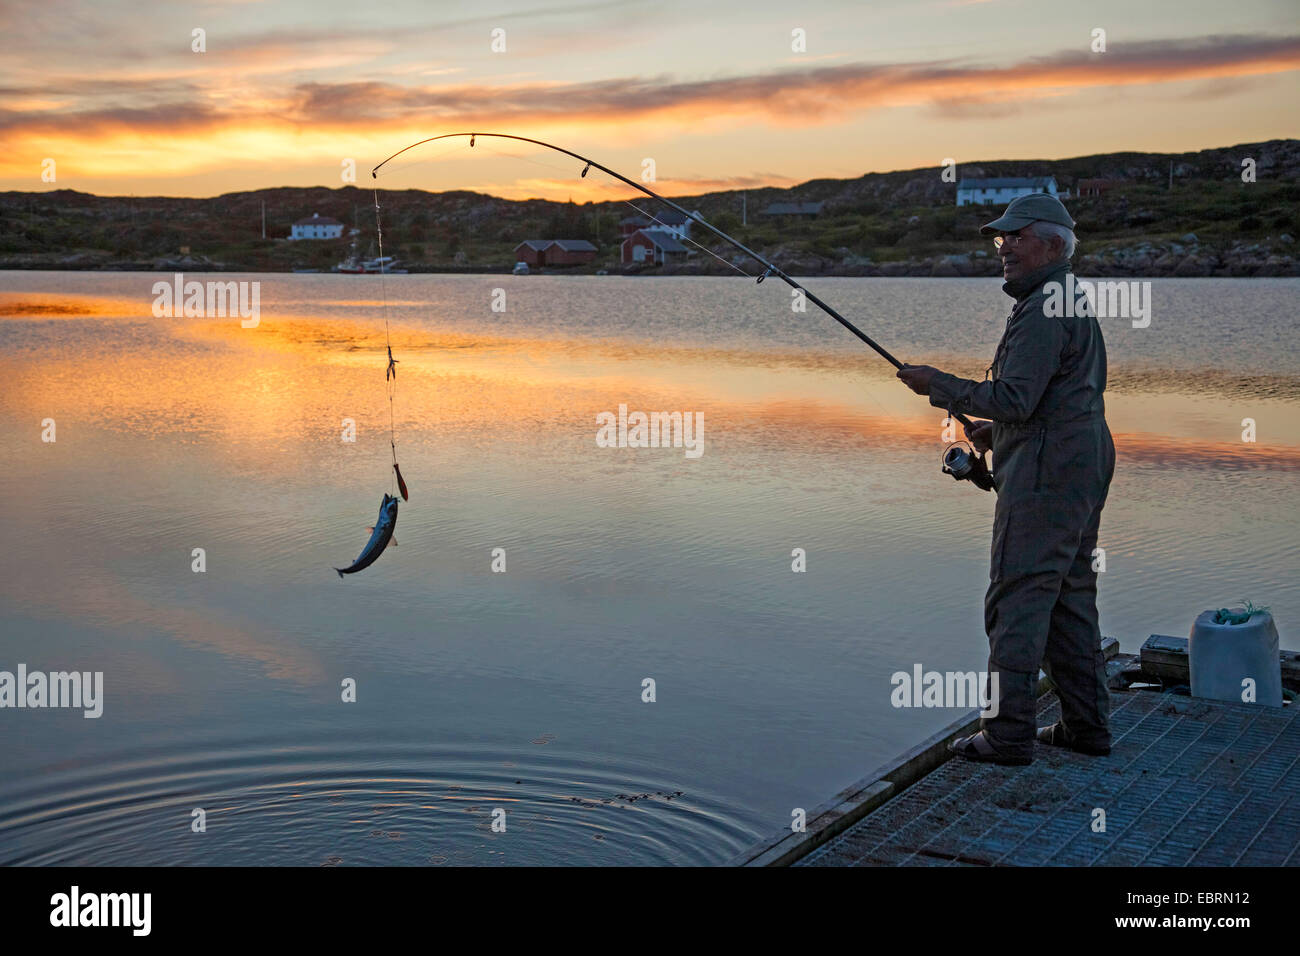 Atlantic mackerel, common mackerel (Scomber scombrus), angler fishing on boardwalk, Norway, Hitra Stock Photo